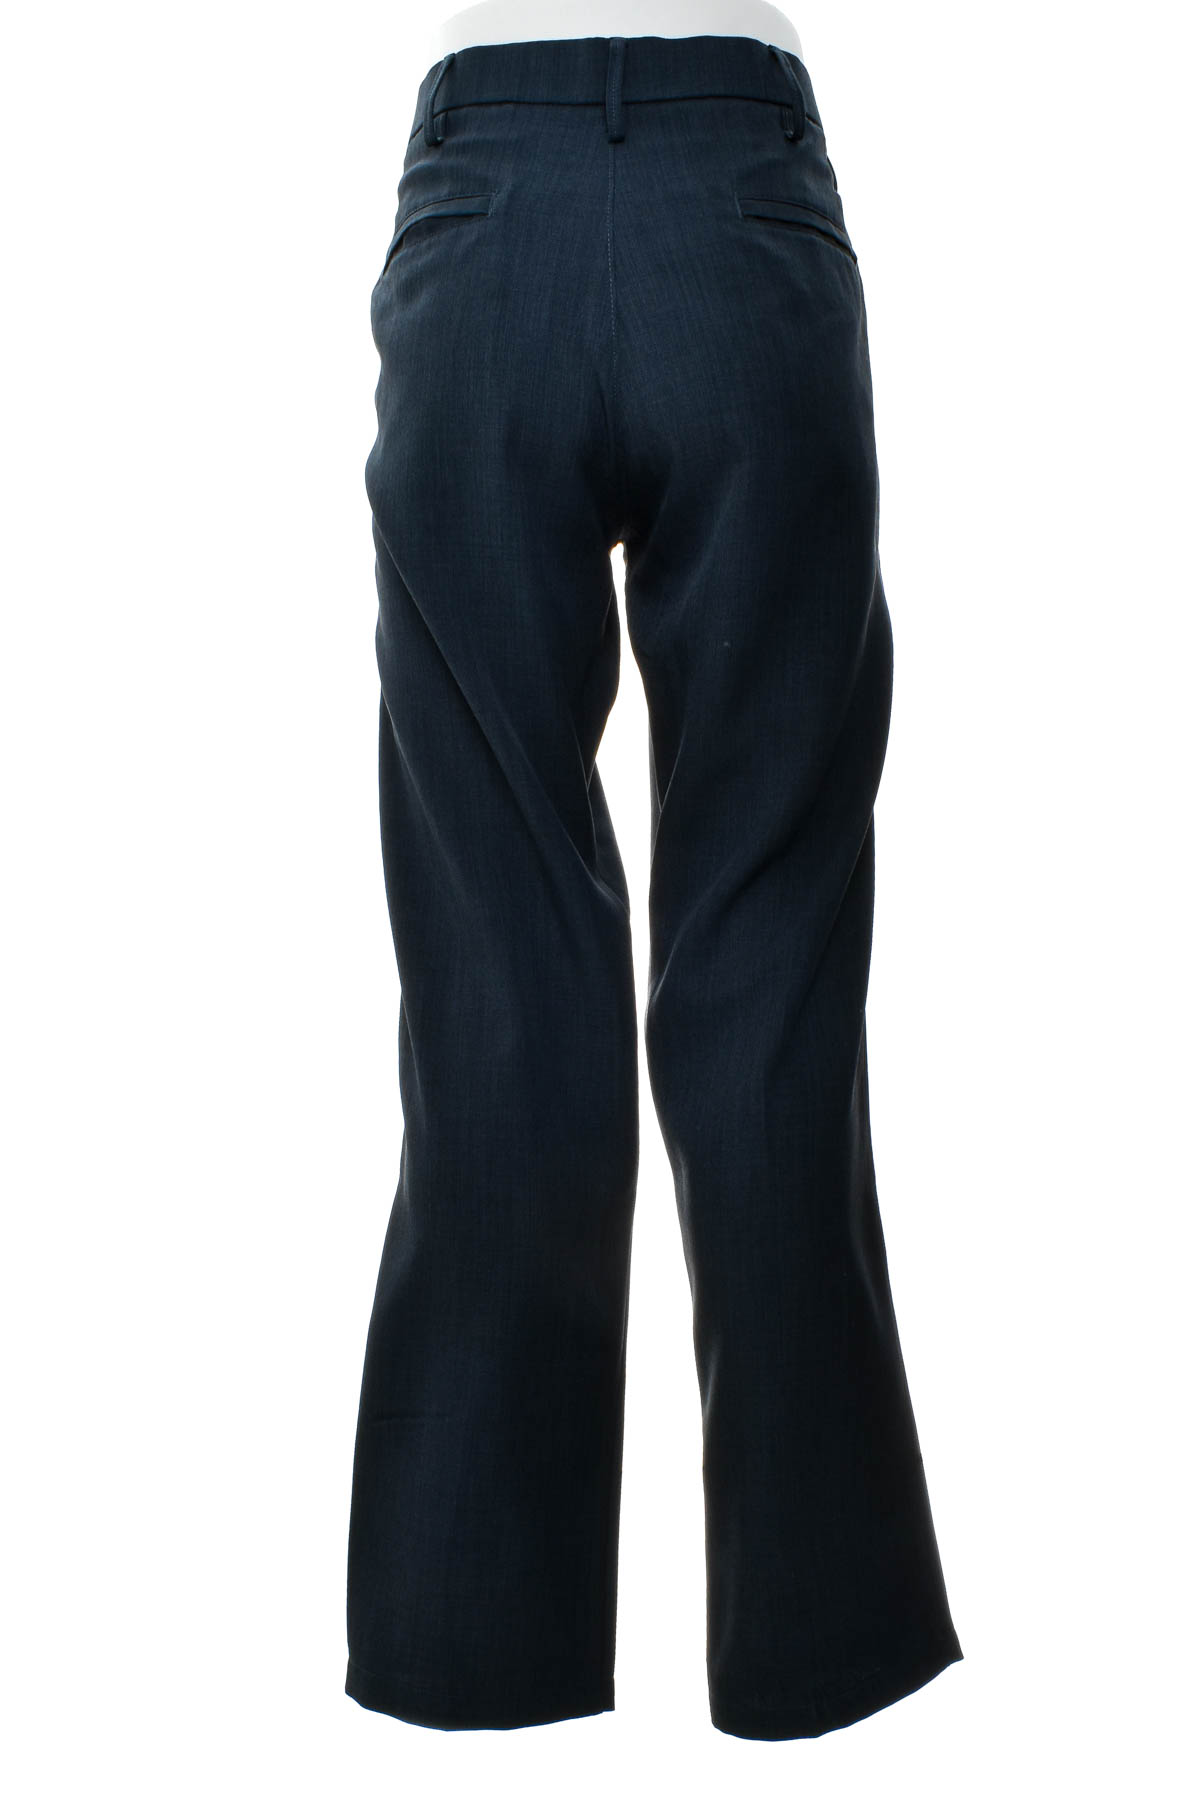 Pantalon pentru bărbați - HAGGAR - 1